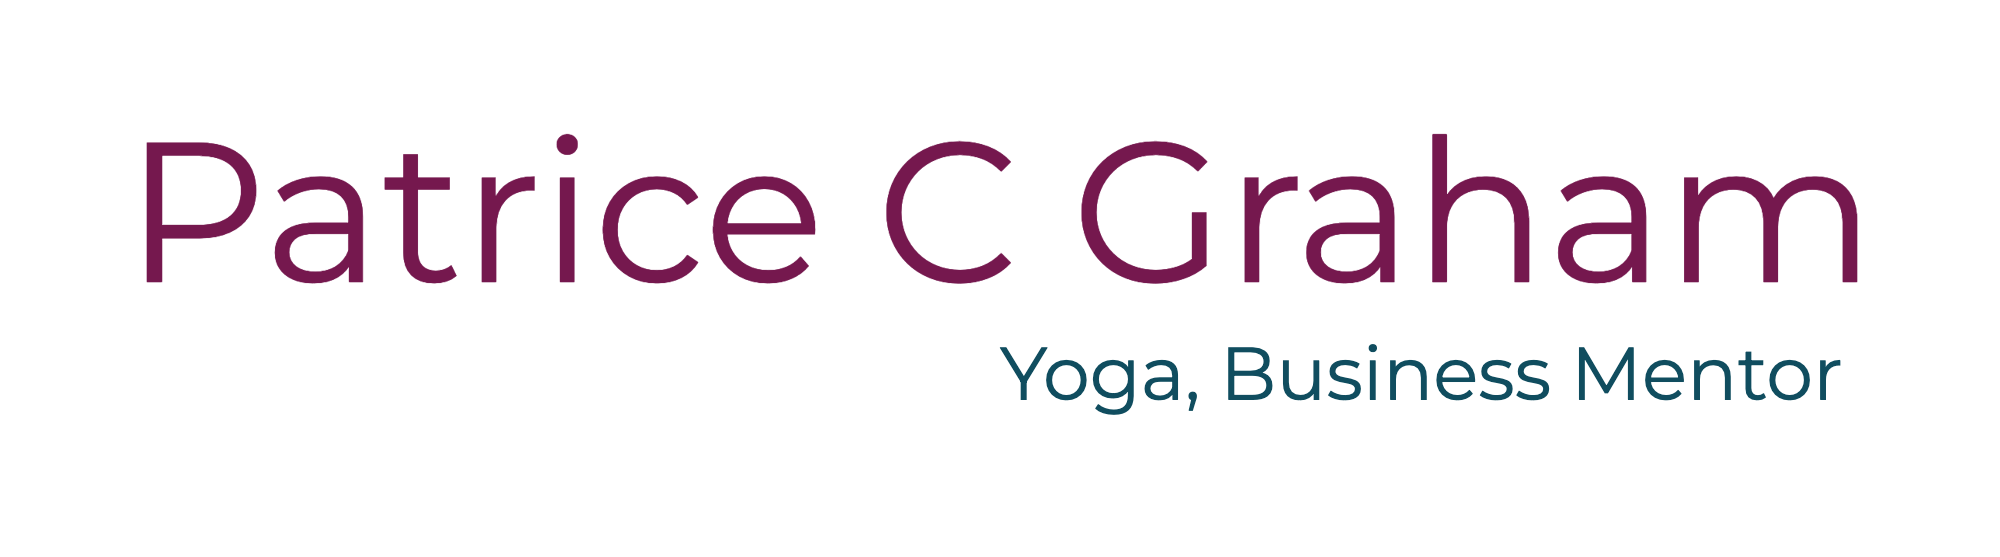 Patrice C. Graham - Yoga, Business Mentor